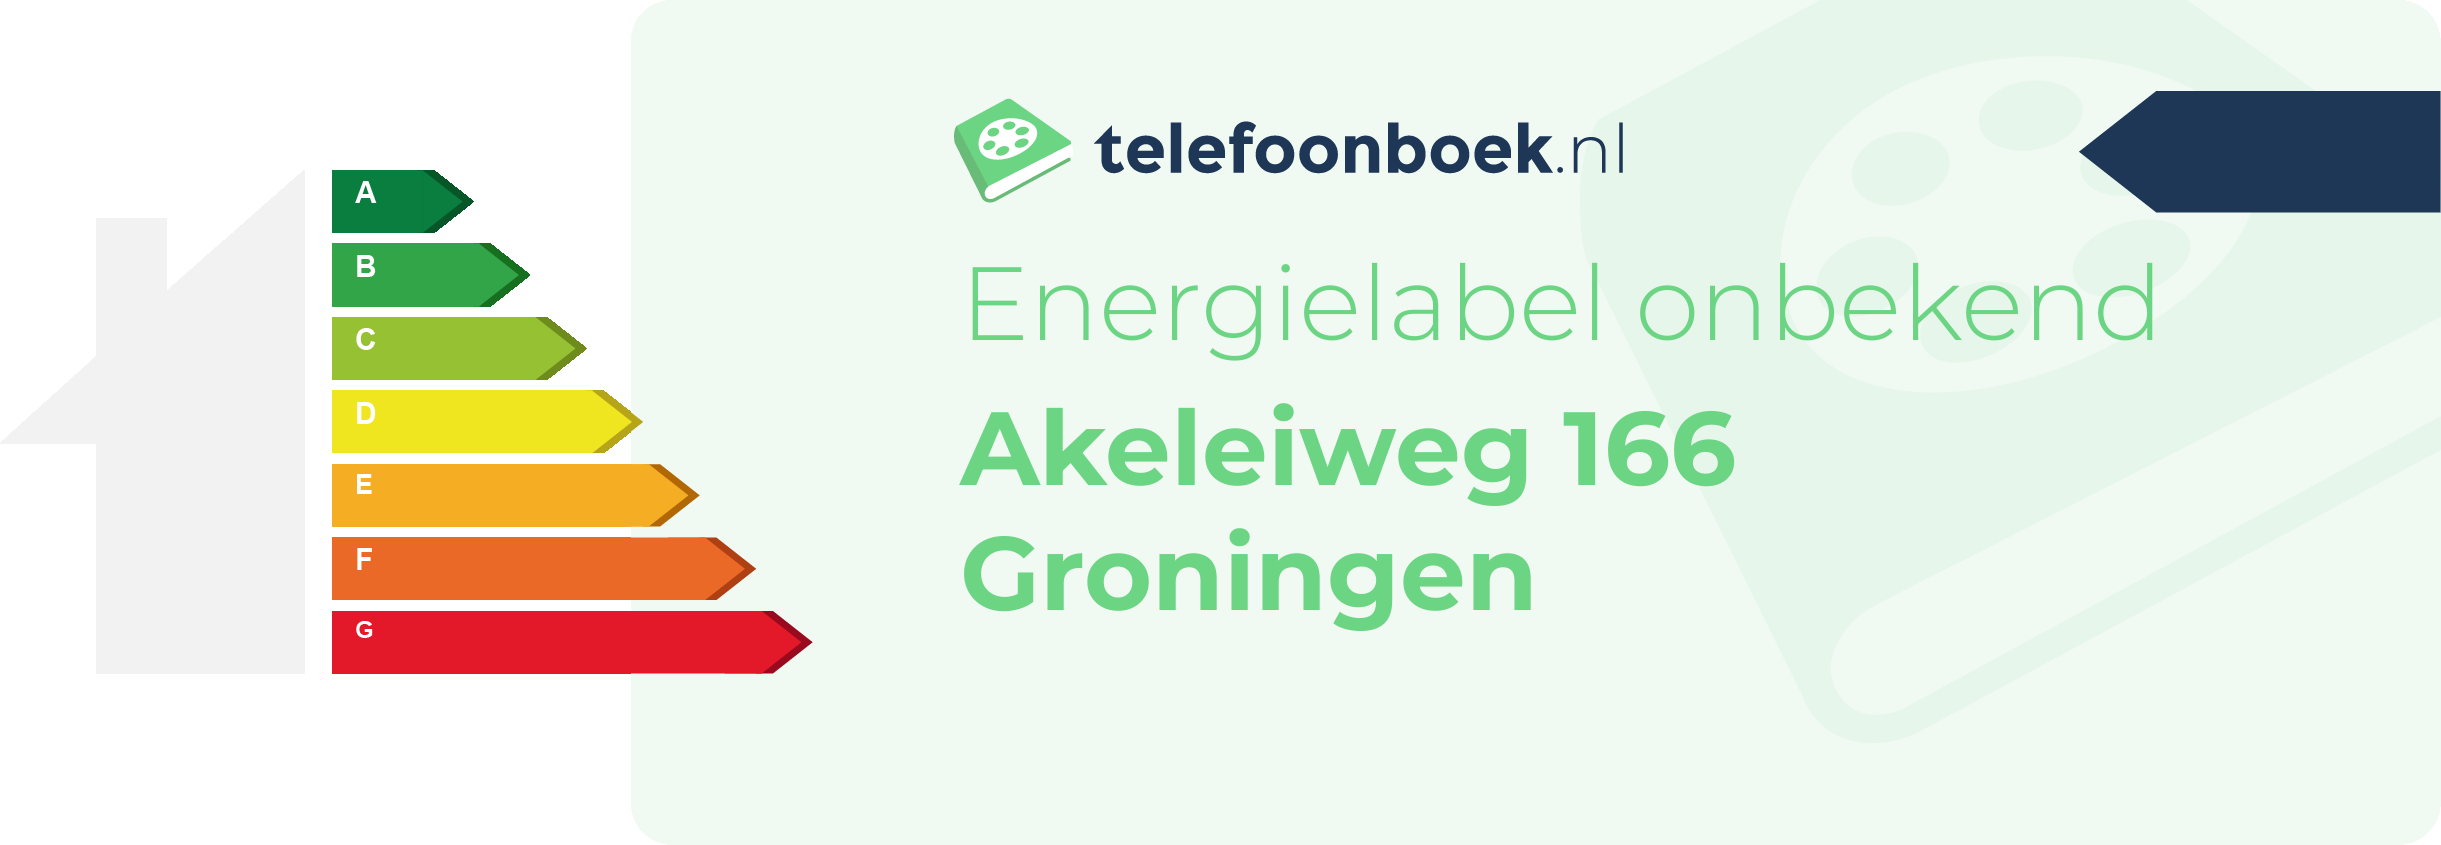 Energielabel Akeleiweg 166 Groningen